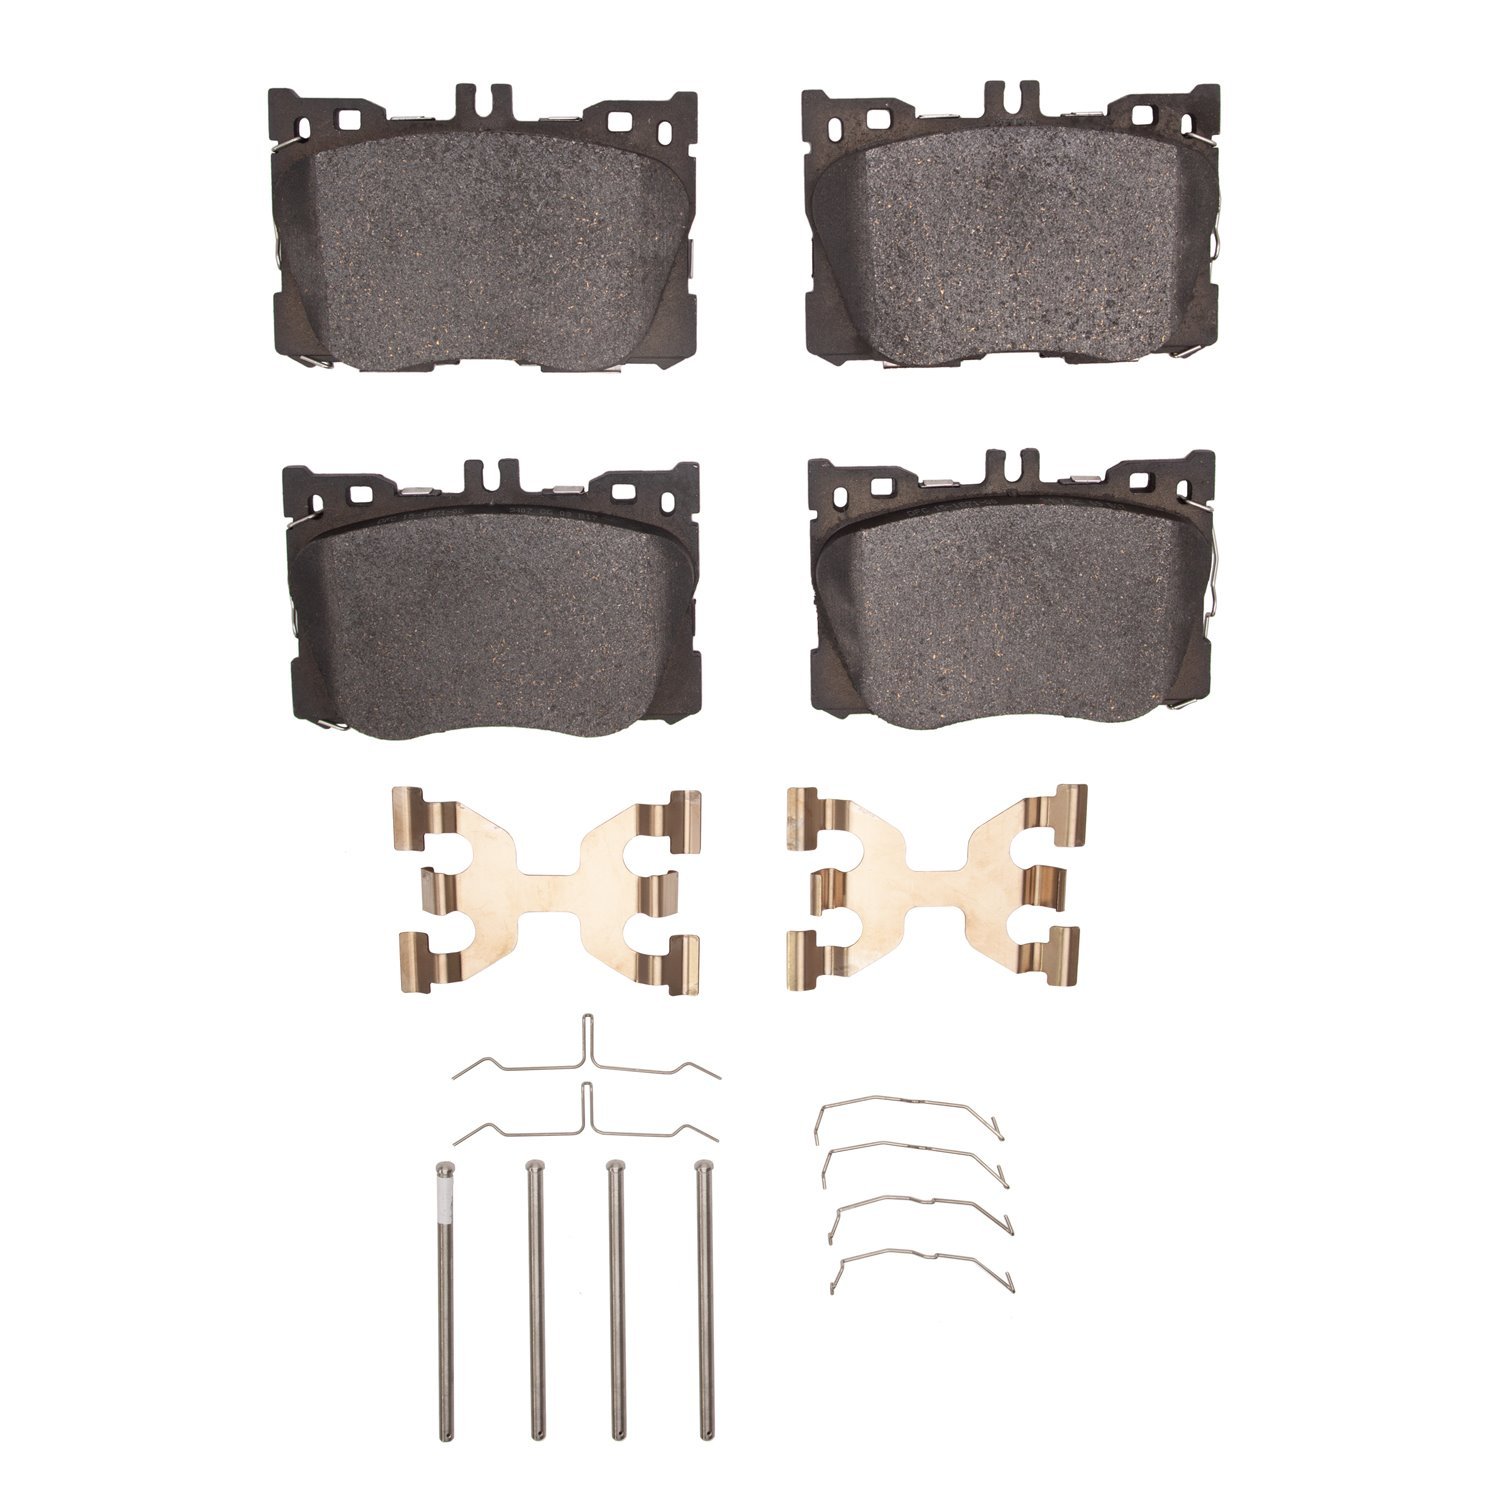 1600-1871-01 5000 Euro Ceramic Brake Pads & Hardware Kit, Fits Select Mercedes-Benz, Position: Front